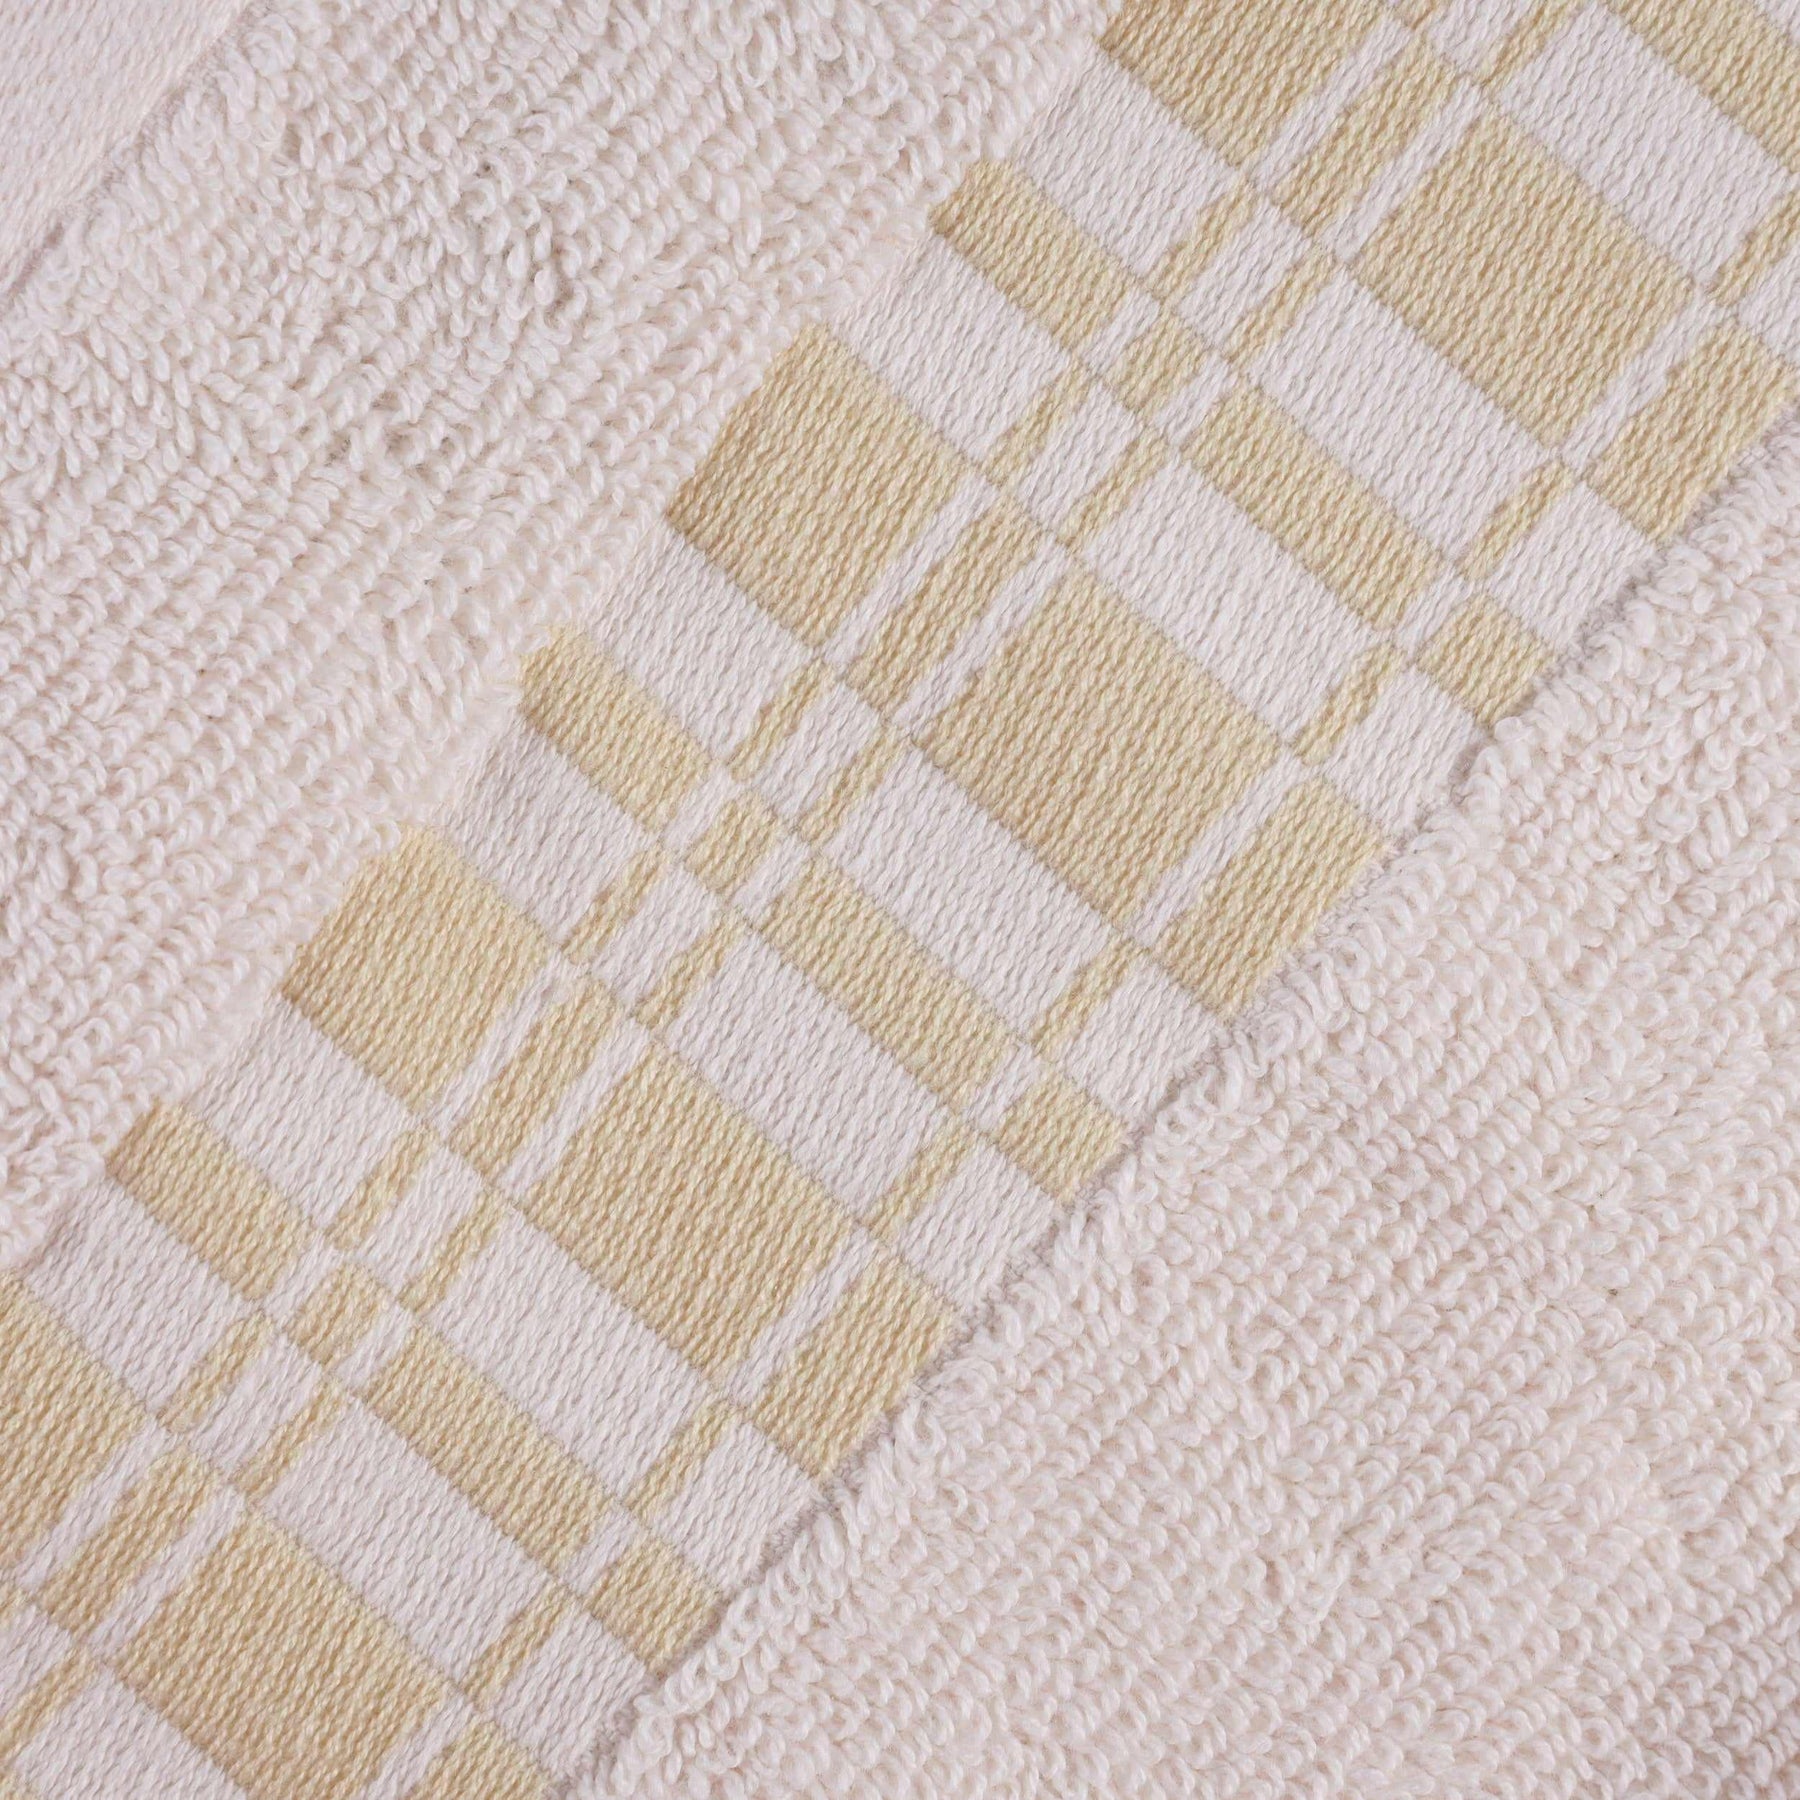  Superior Larissa Cotton 4-Piece Bath Towel Set with Geometric Embroidered Jacquard Border - Ivory